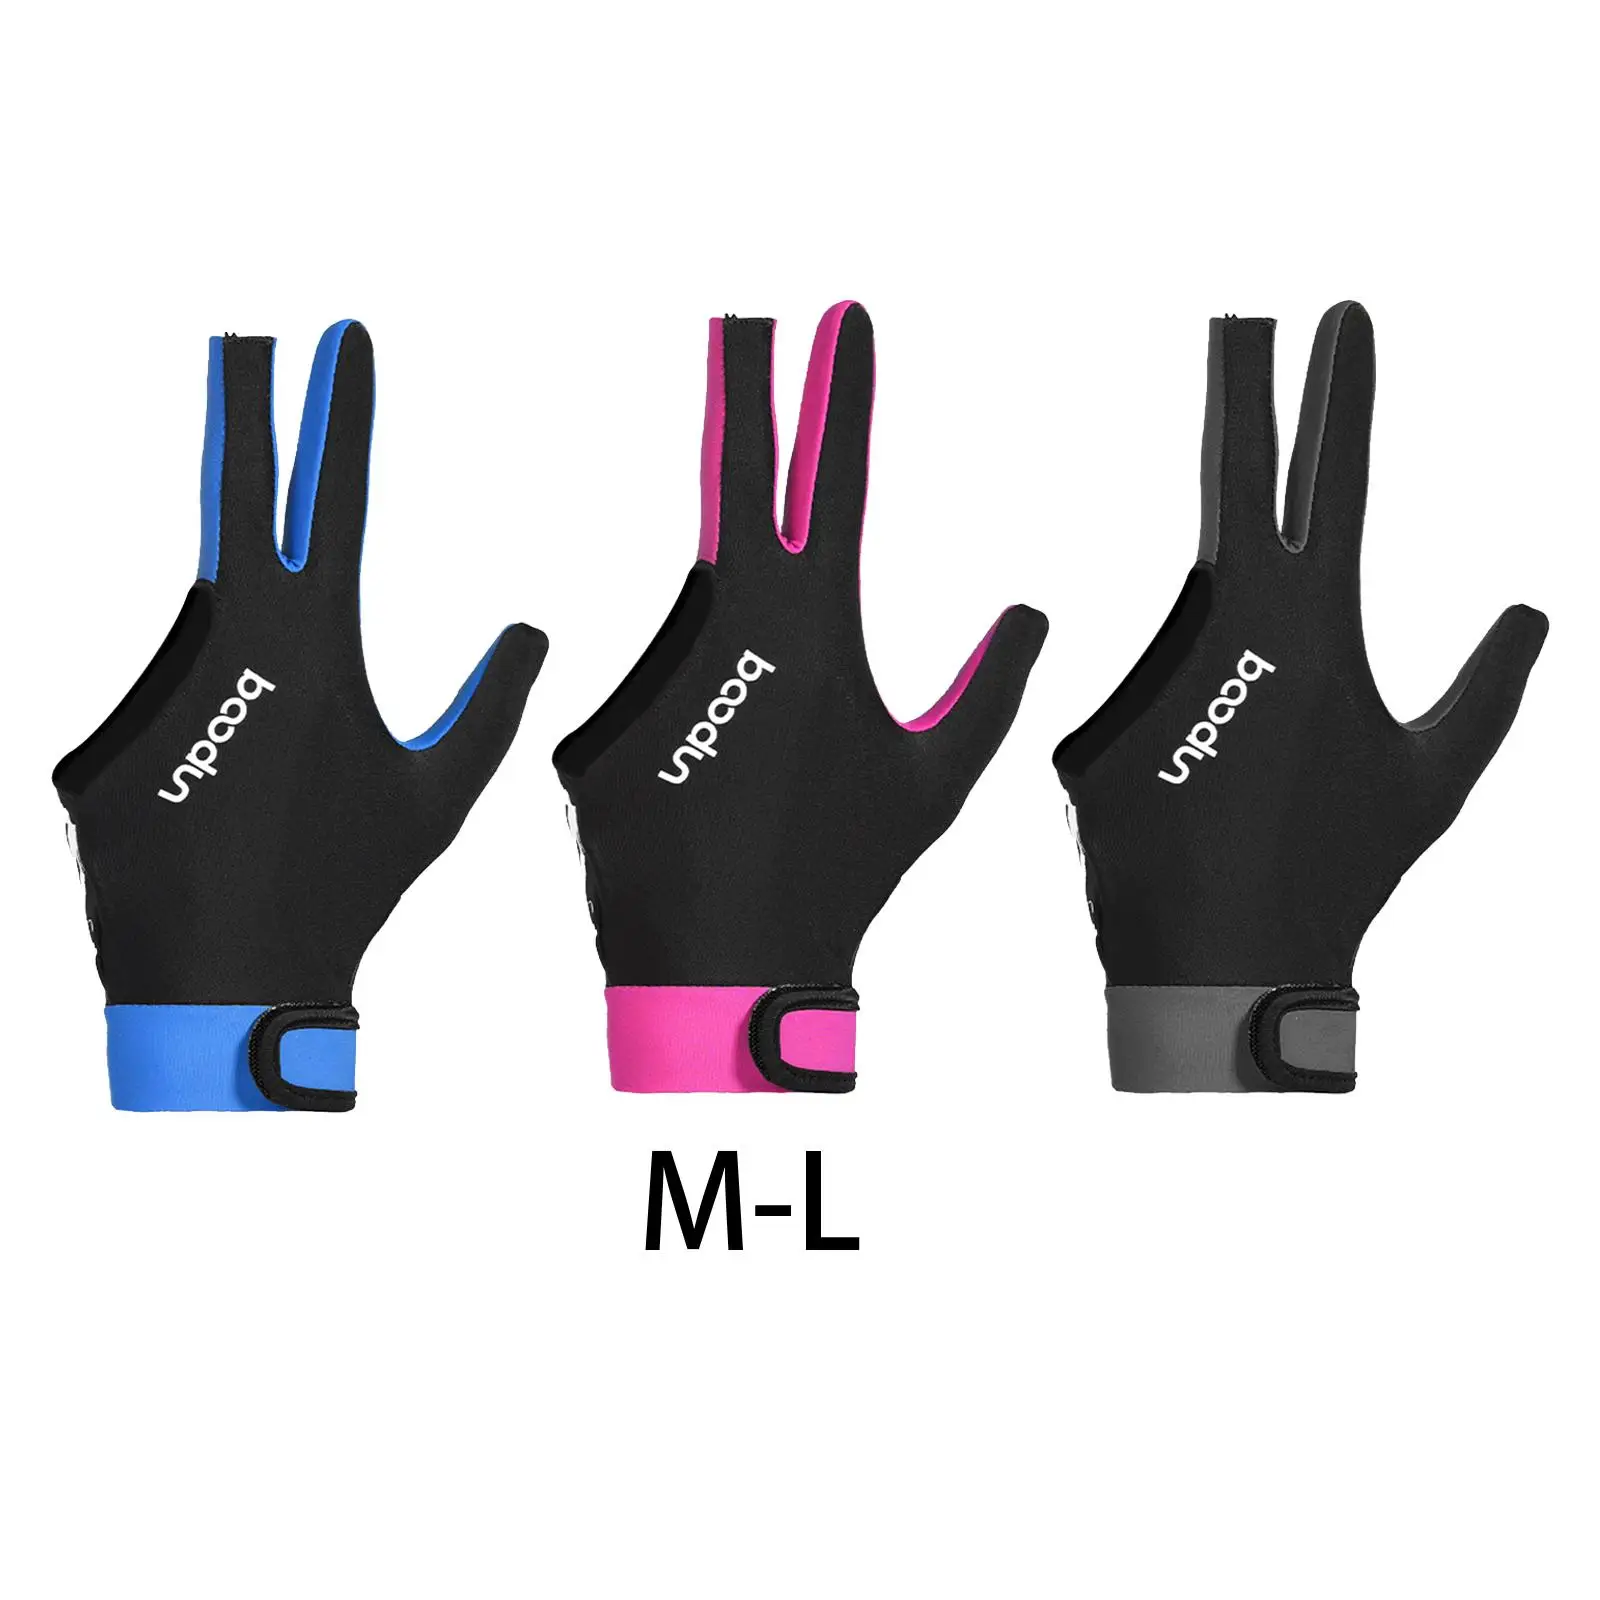 3 Finger Billiard Gloves Pool Cue Gloves Spandex Fabric for Left/Right Hand Men/Women,3 Colors Optional